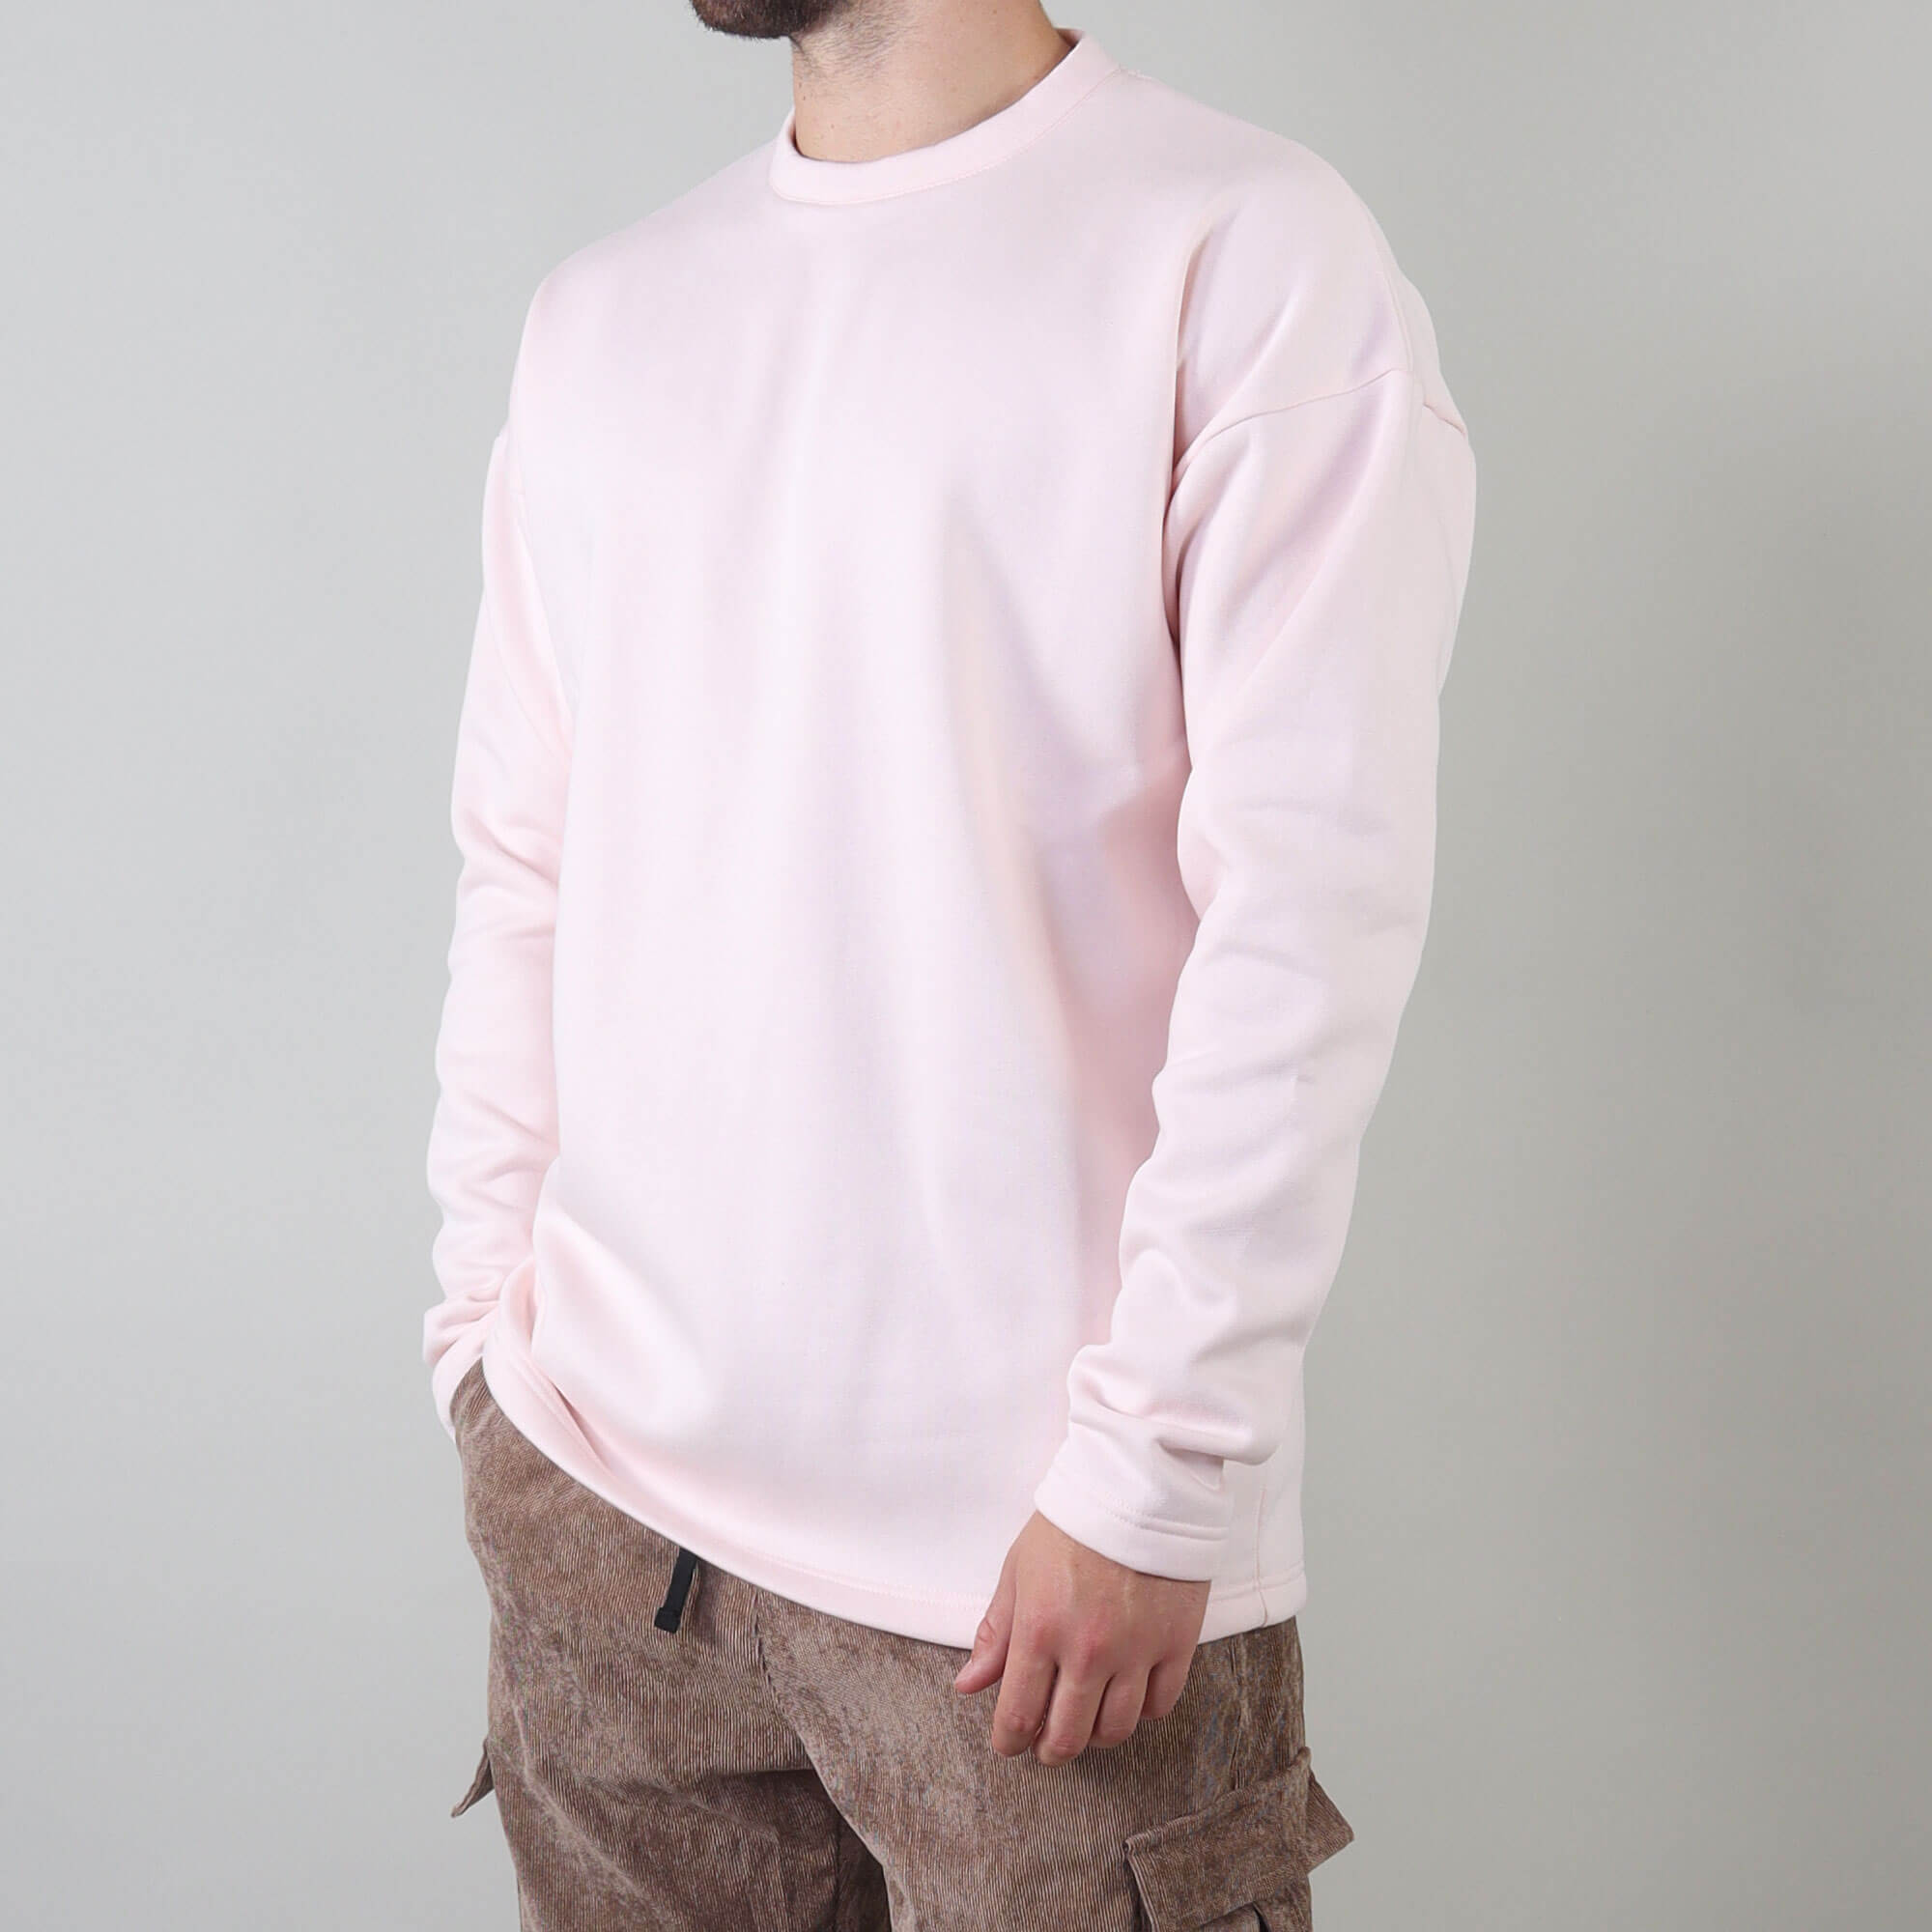 PRJCT sweater baby pink